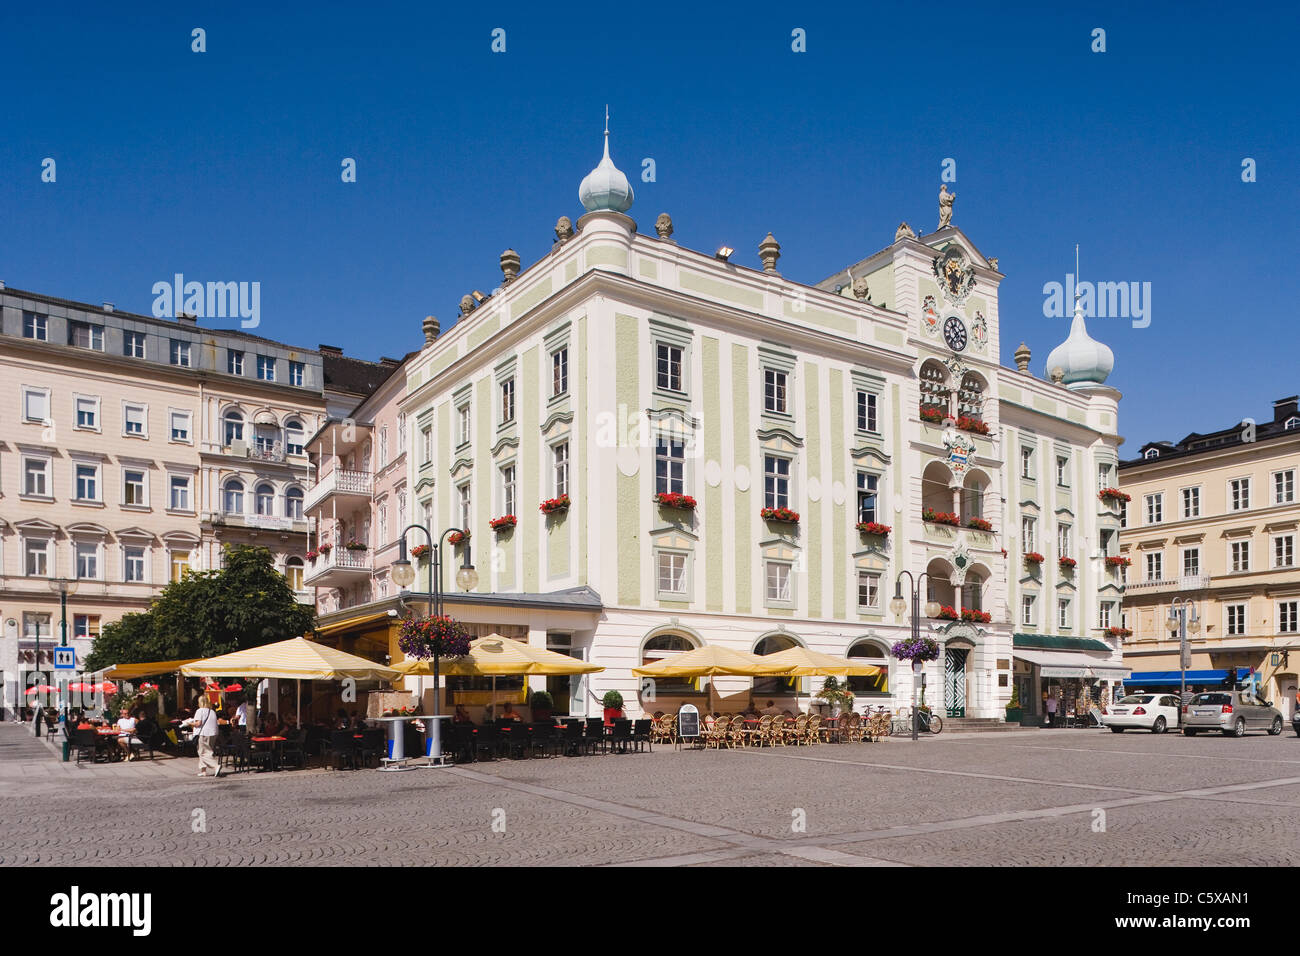 Austria, Gmunden, Town Hall with traditional glockenspiel Stock Photo